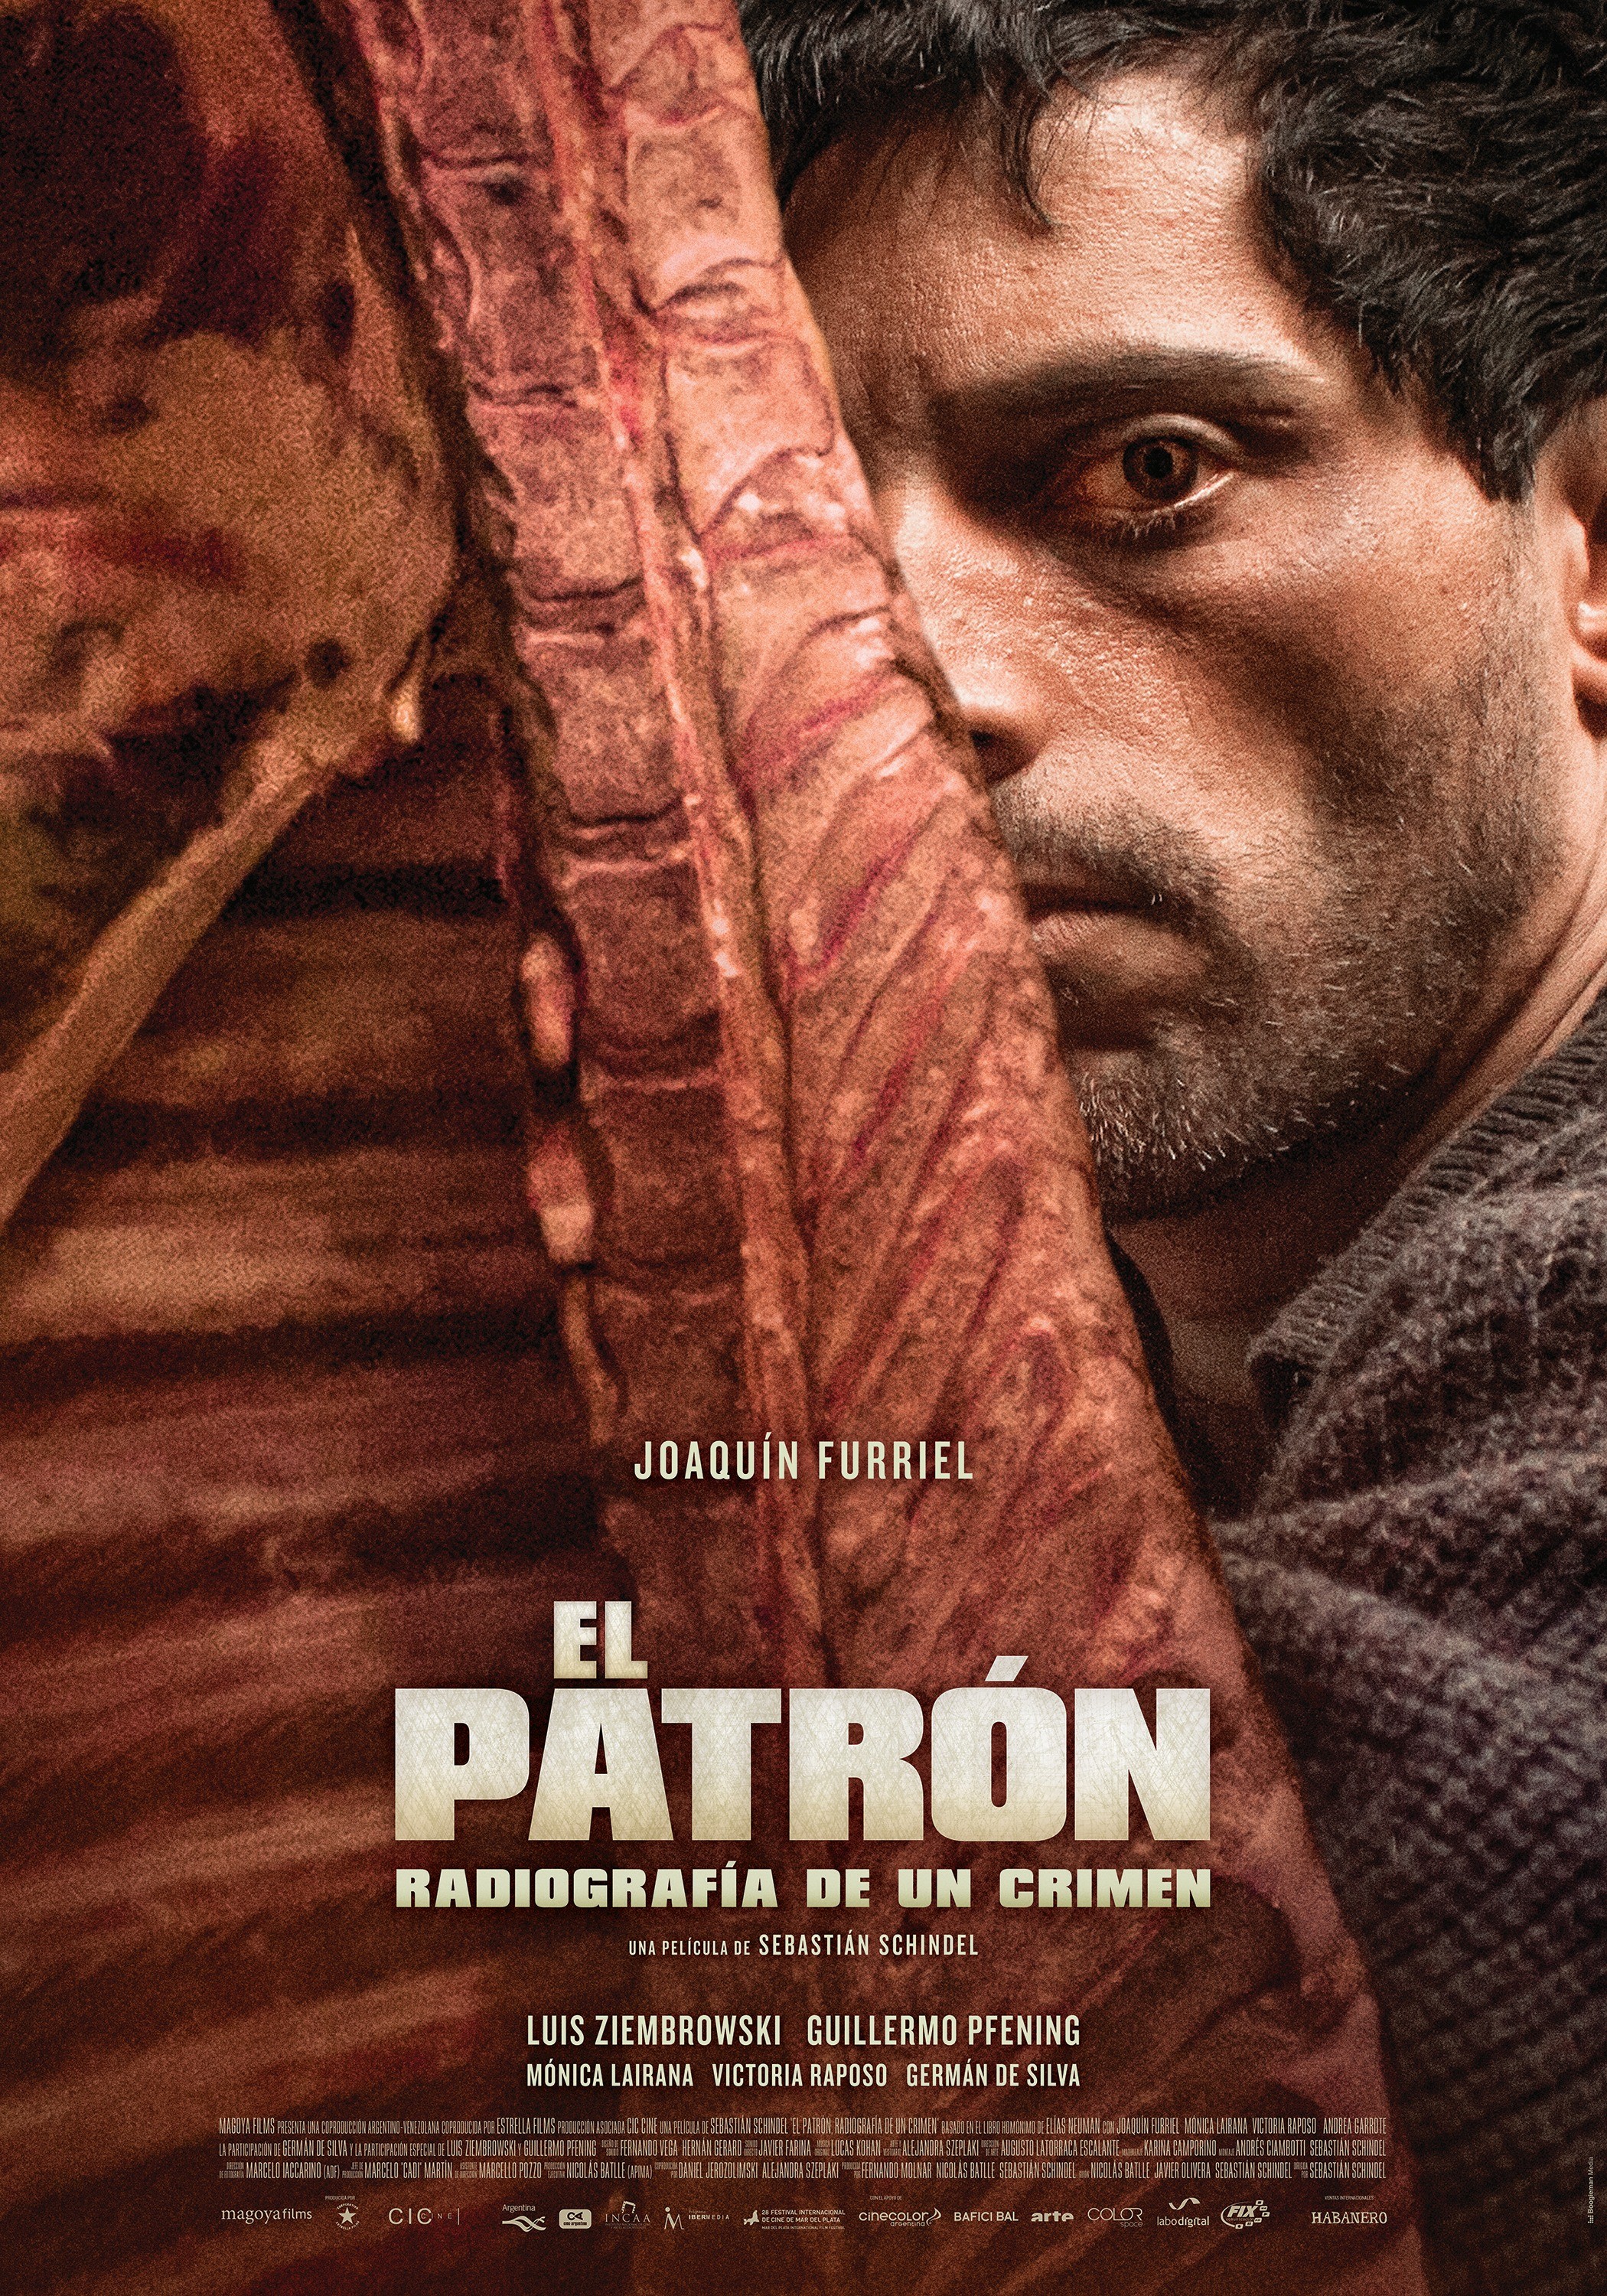 Mega Sized Movie Poster Image for El Patron, Radiografia De Un Crimen 